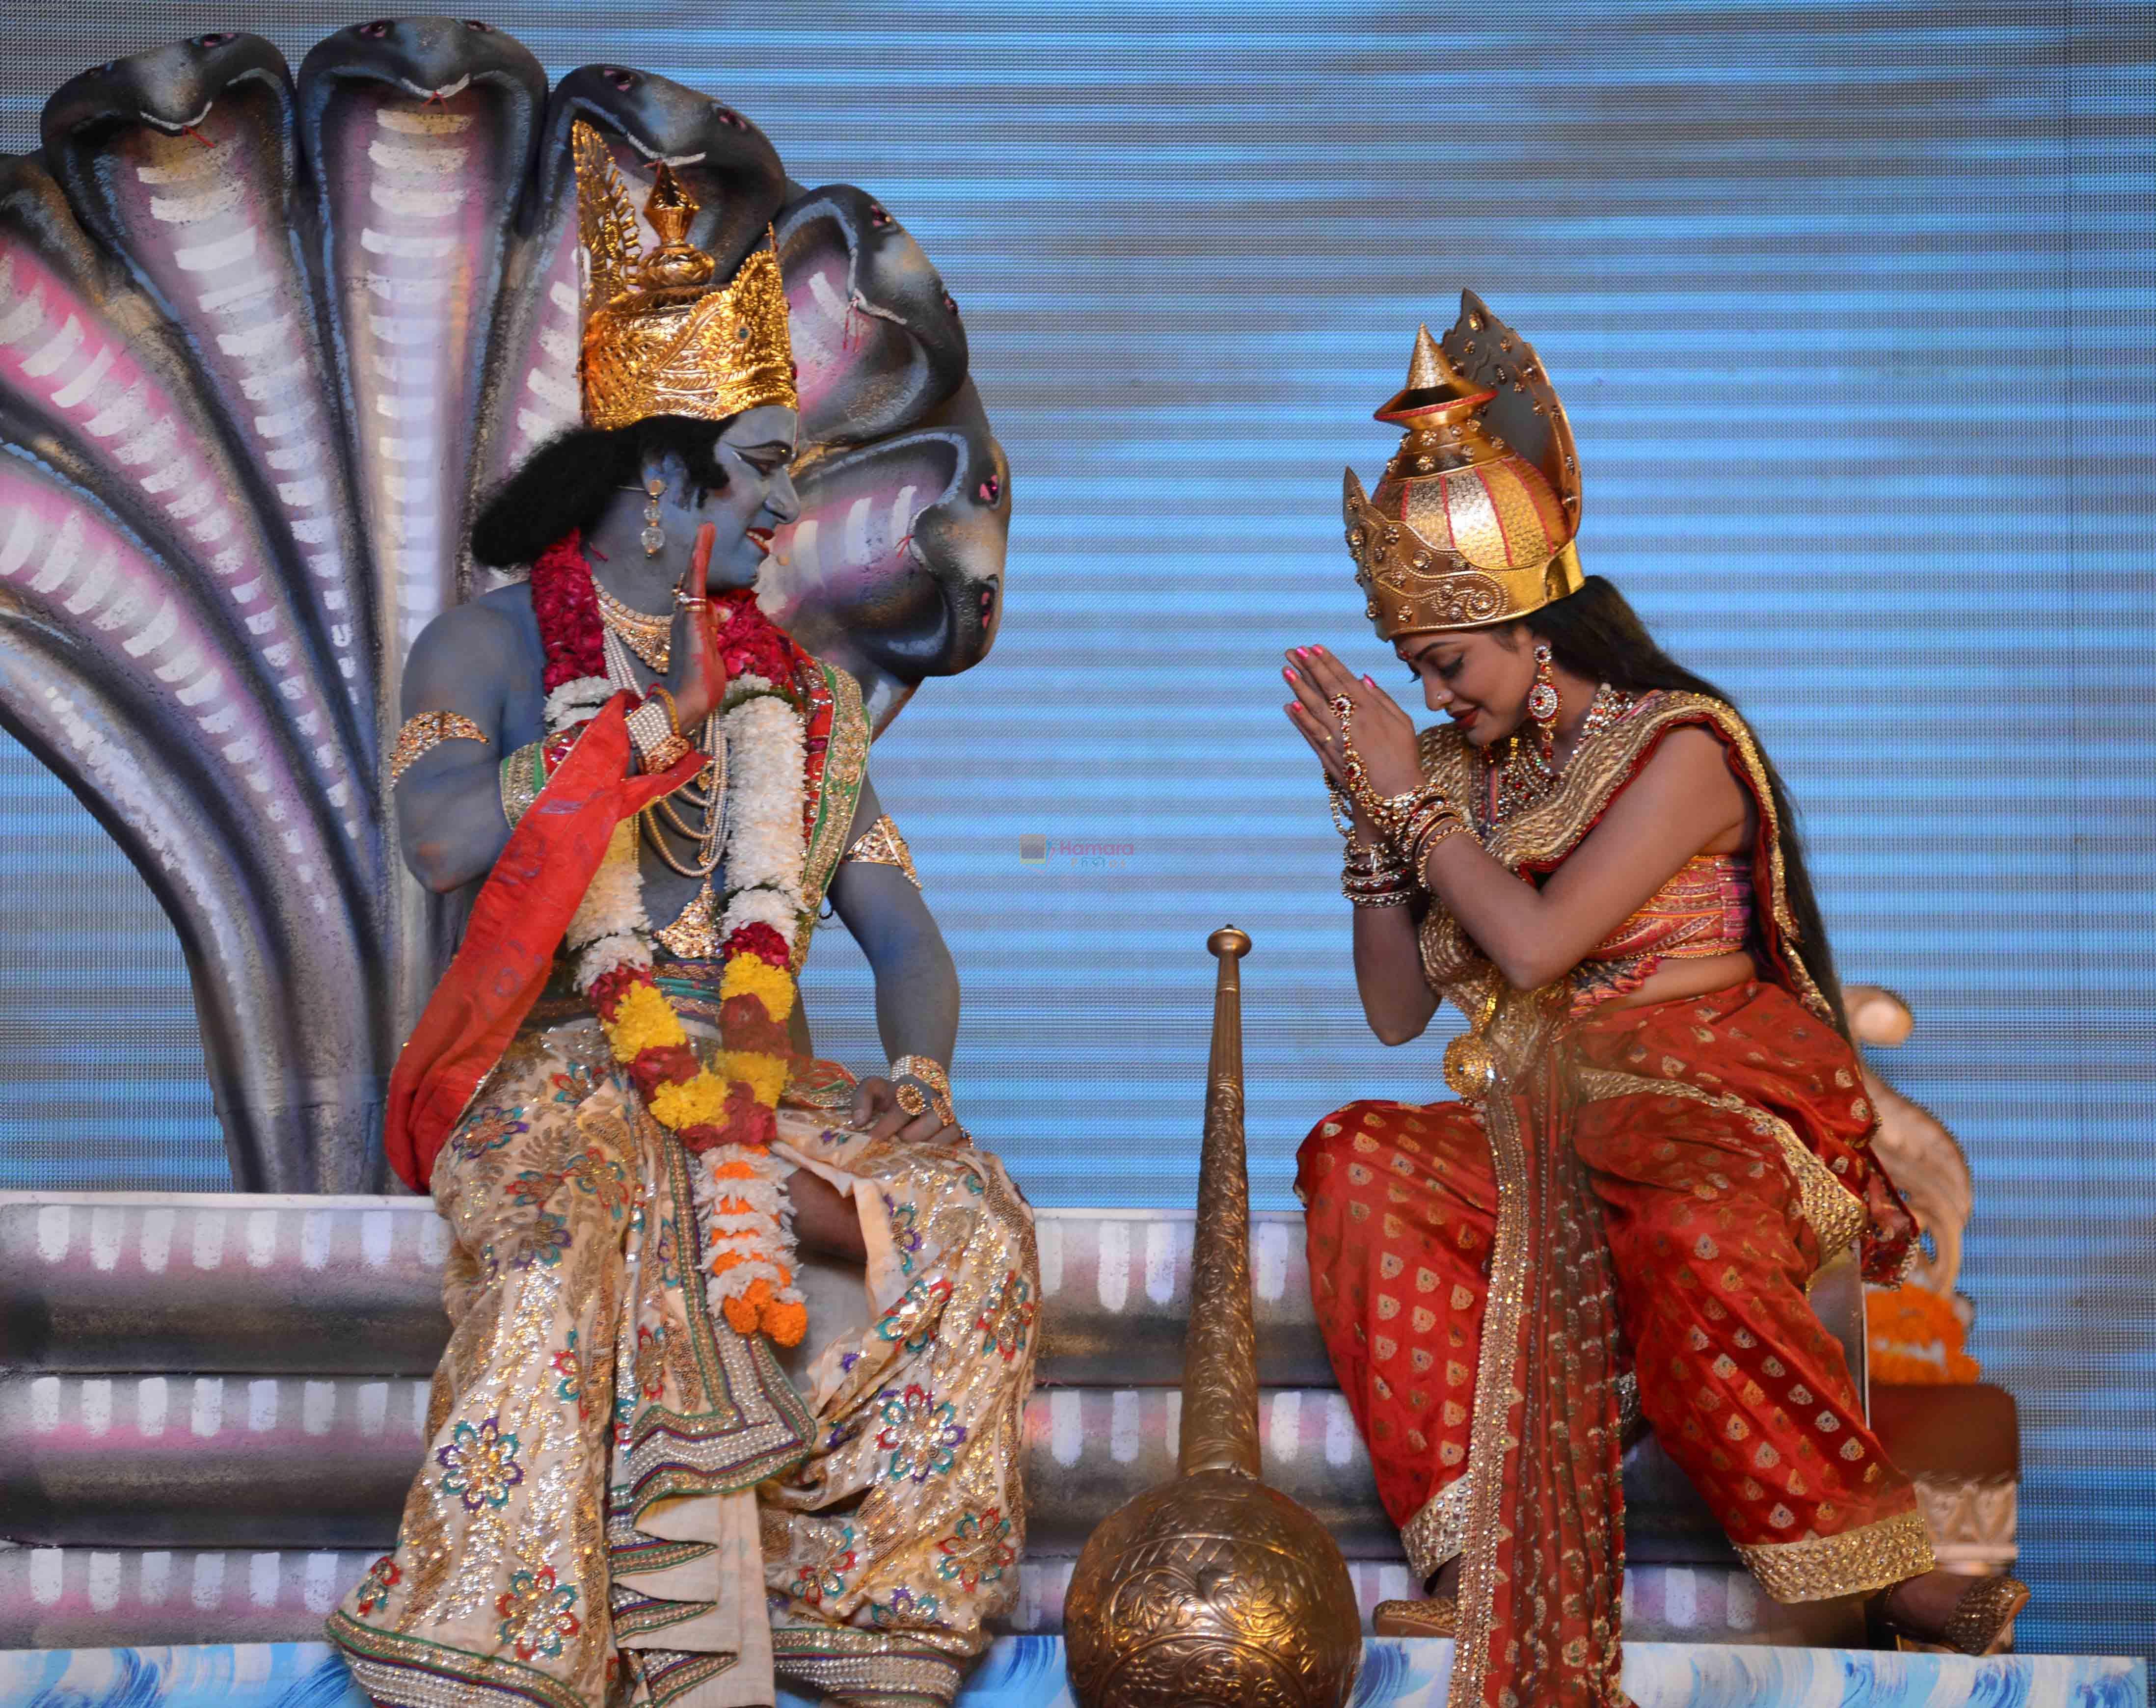 Vishnu & laxmi Playing the Ram leela at Luv Kush ram Leela committee at Lal Qila maidan in Delhi on 13th Oct 2015